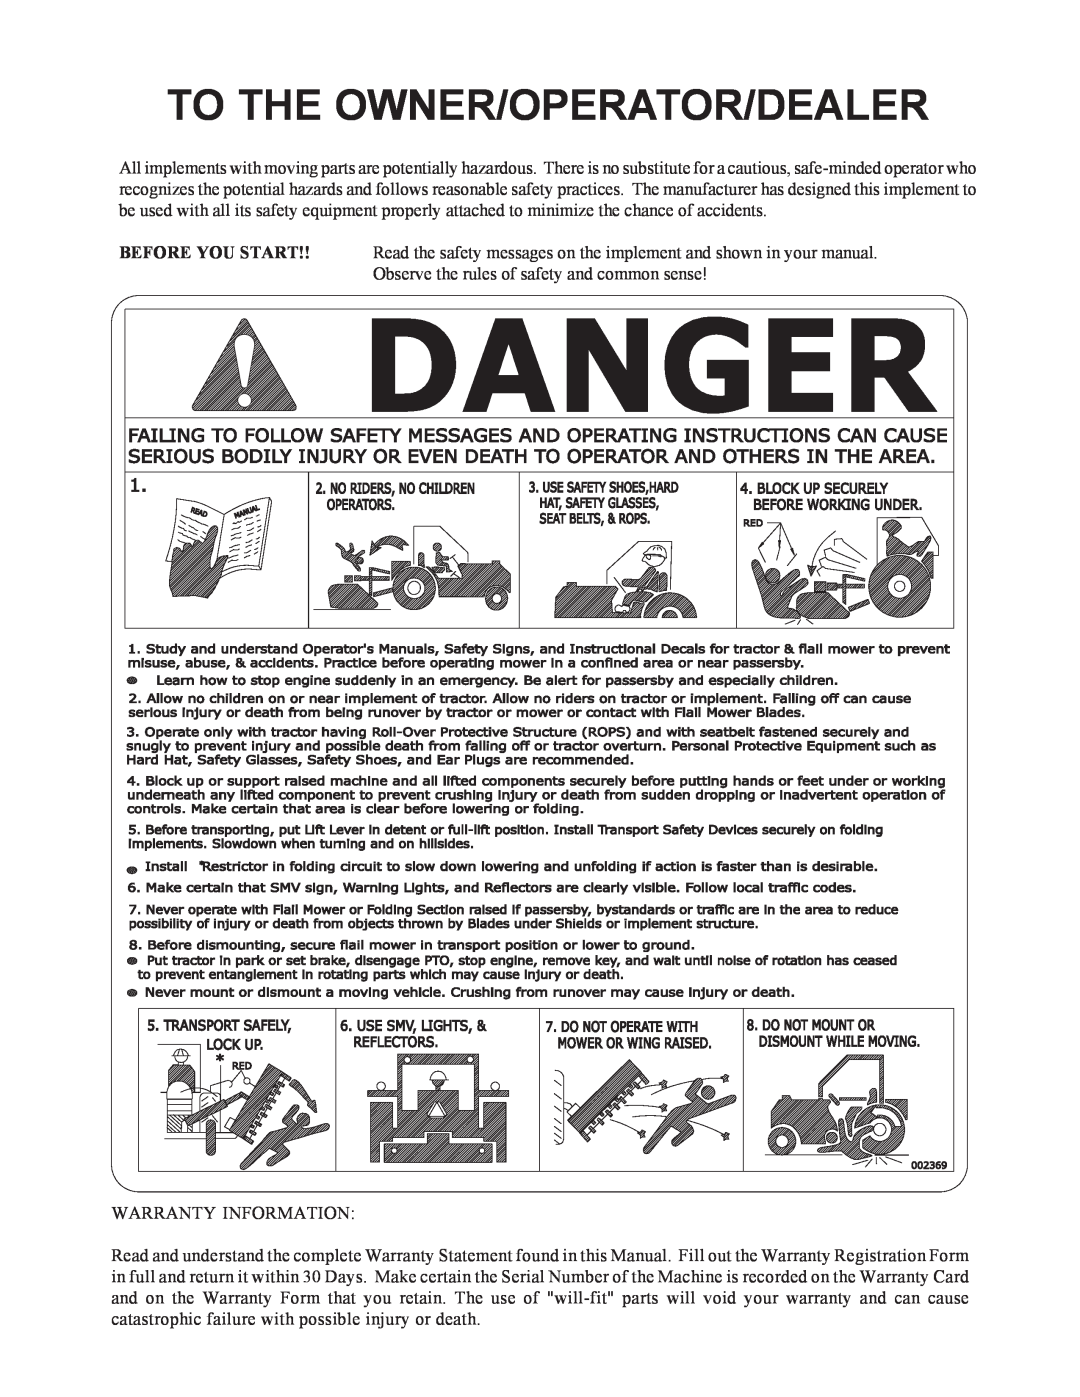 Alamo 02969111P manual Danger, To The Owner/Operator/Dealer 